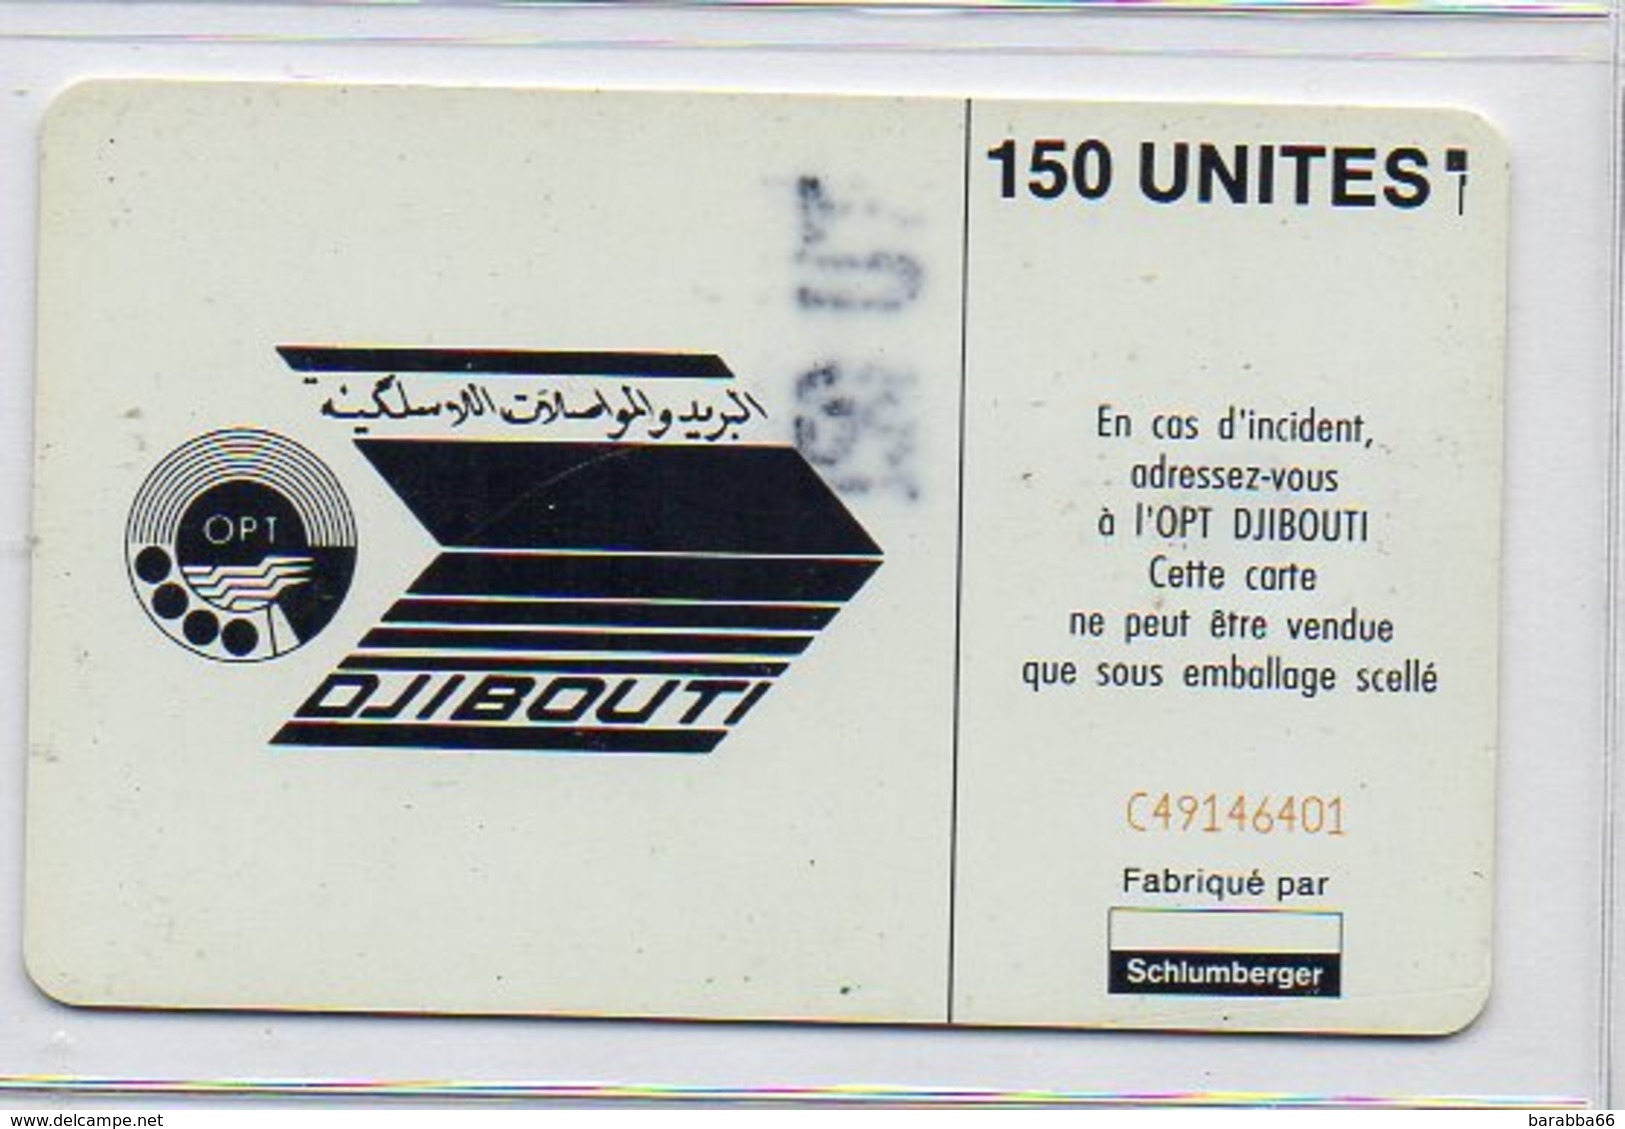 TELECARTE - 150 UNITES - Djibouti